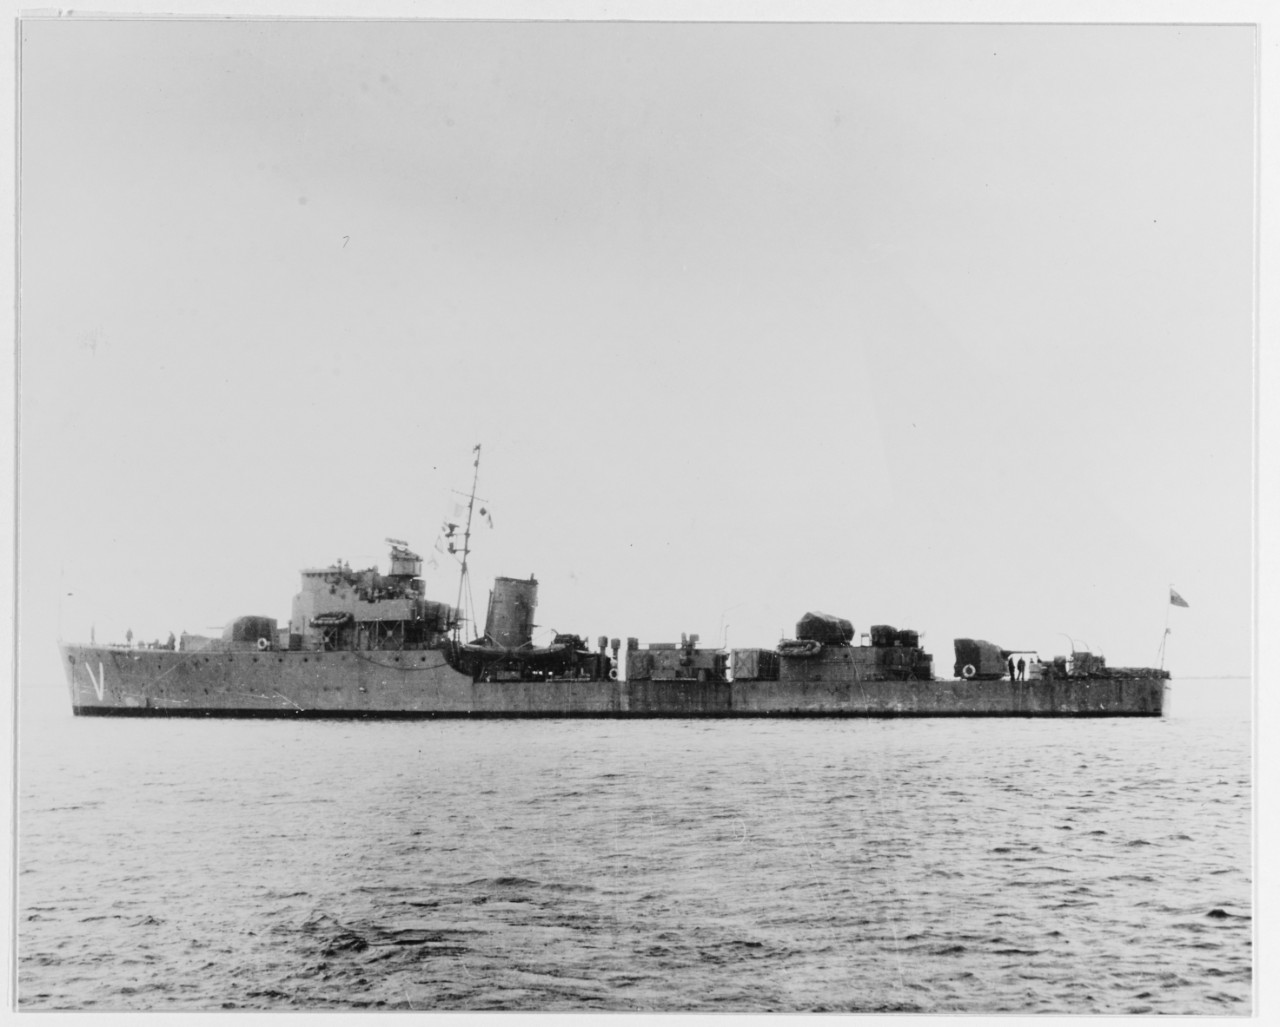 PRESIDENTE VELASCO IBARRA (Ecuadorian frigate, 1940)